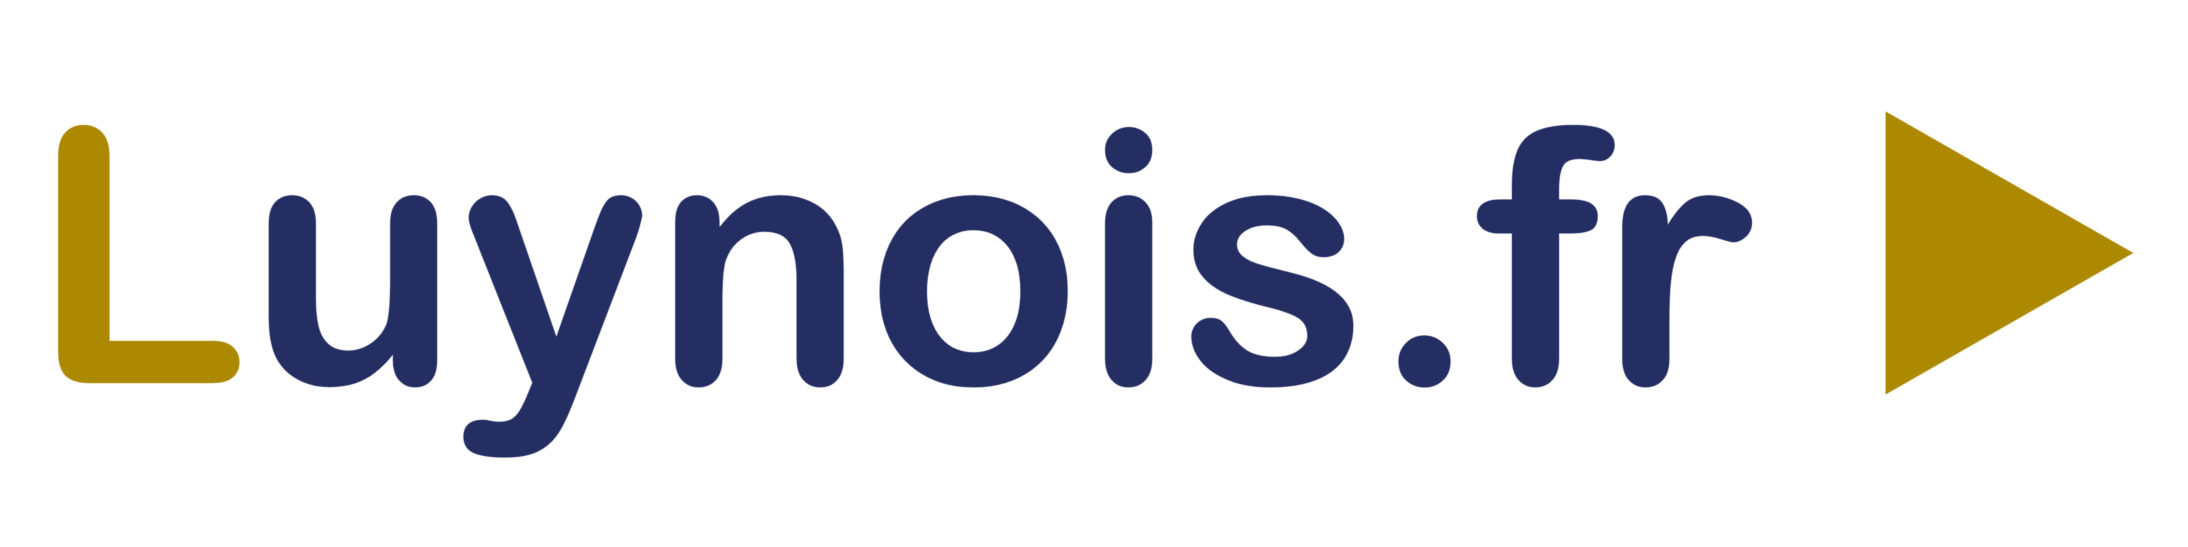 Logo - Luynois.fr